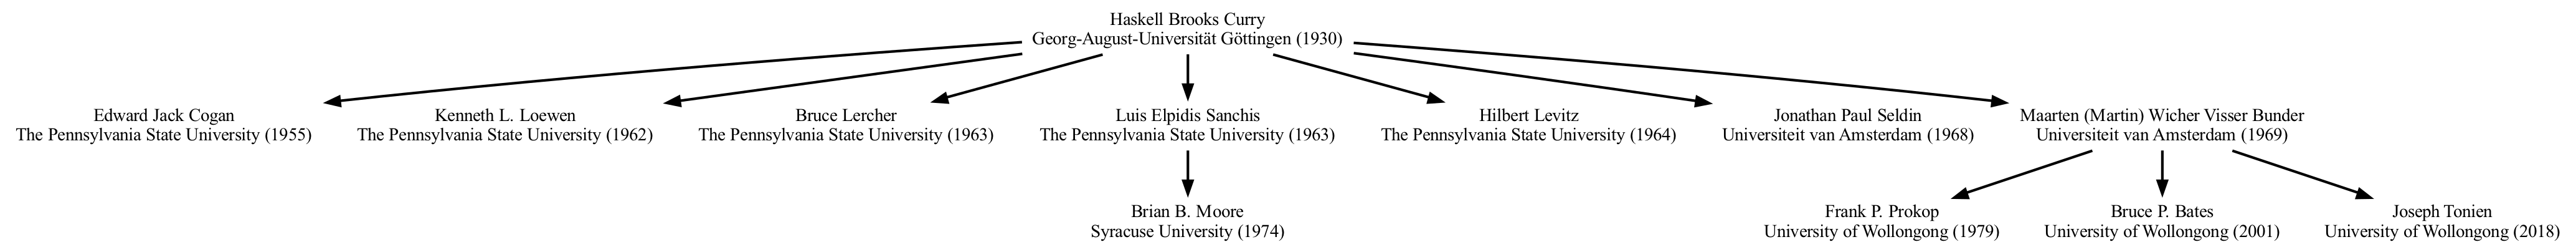 Curry math genealogy descendants